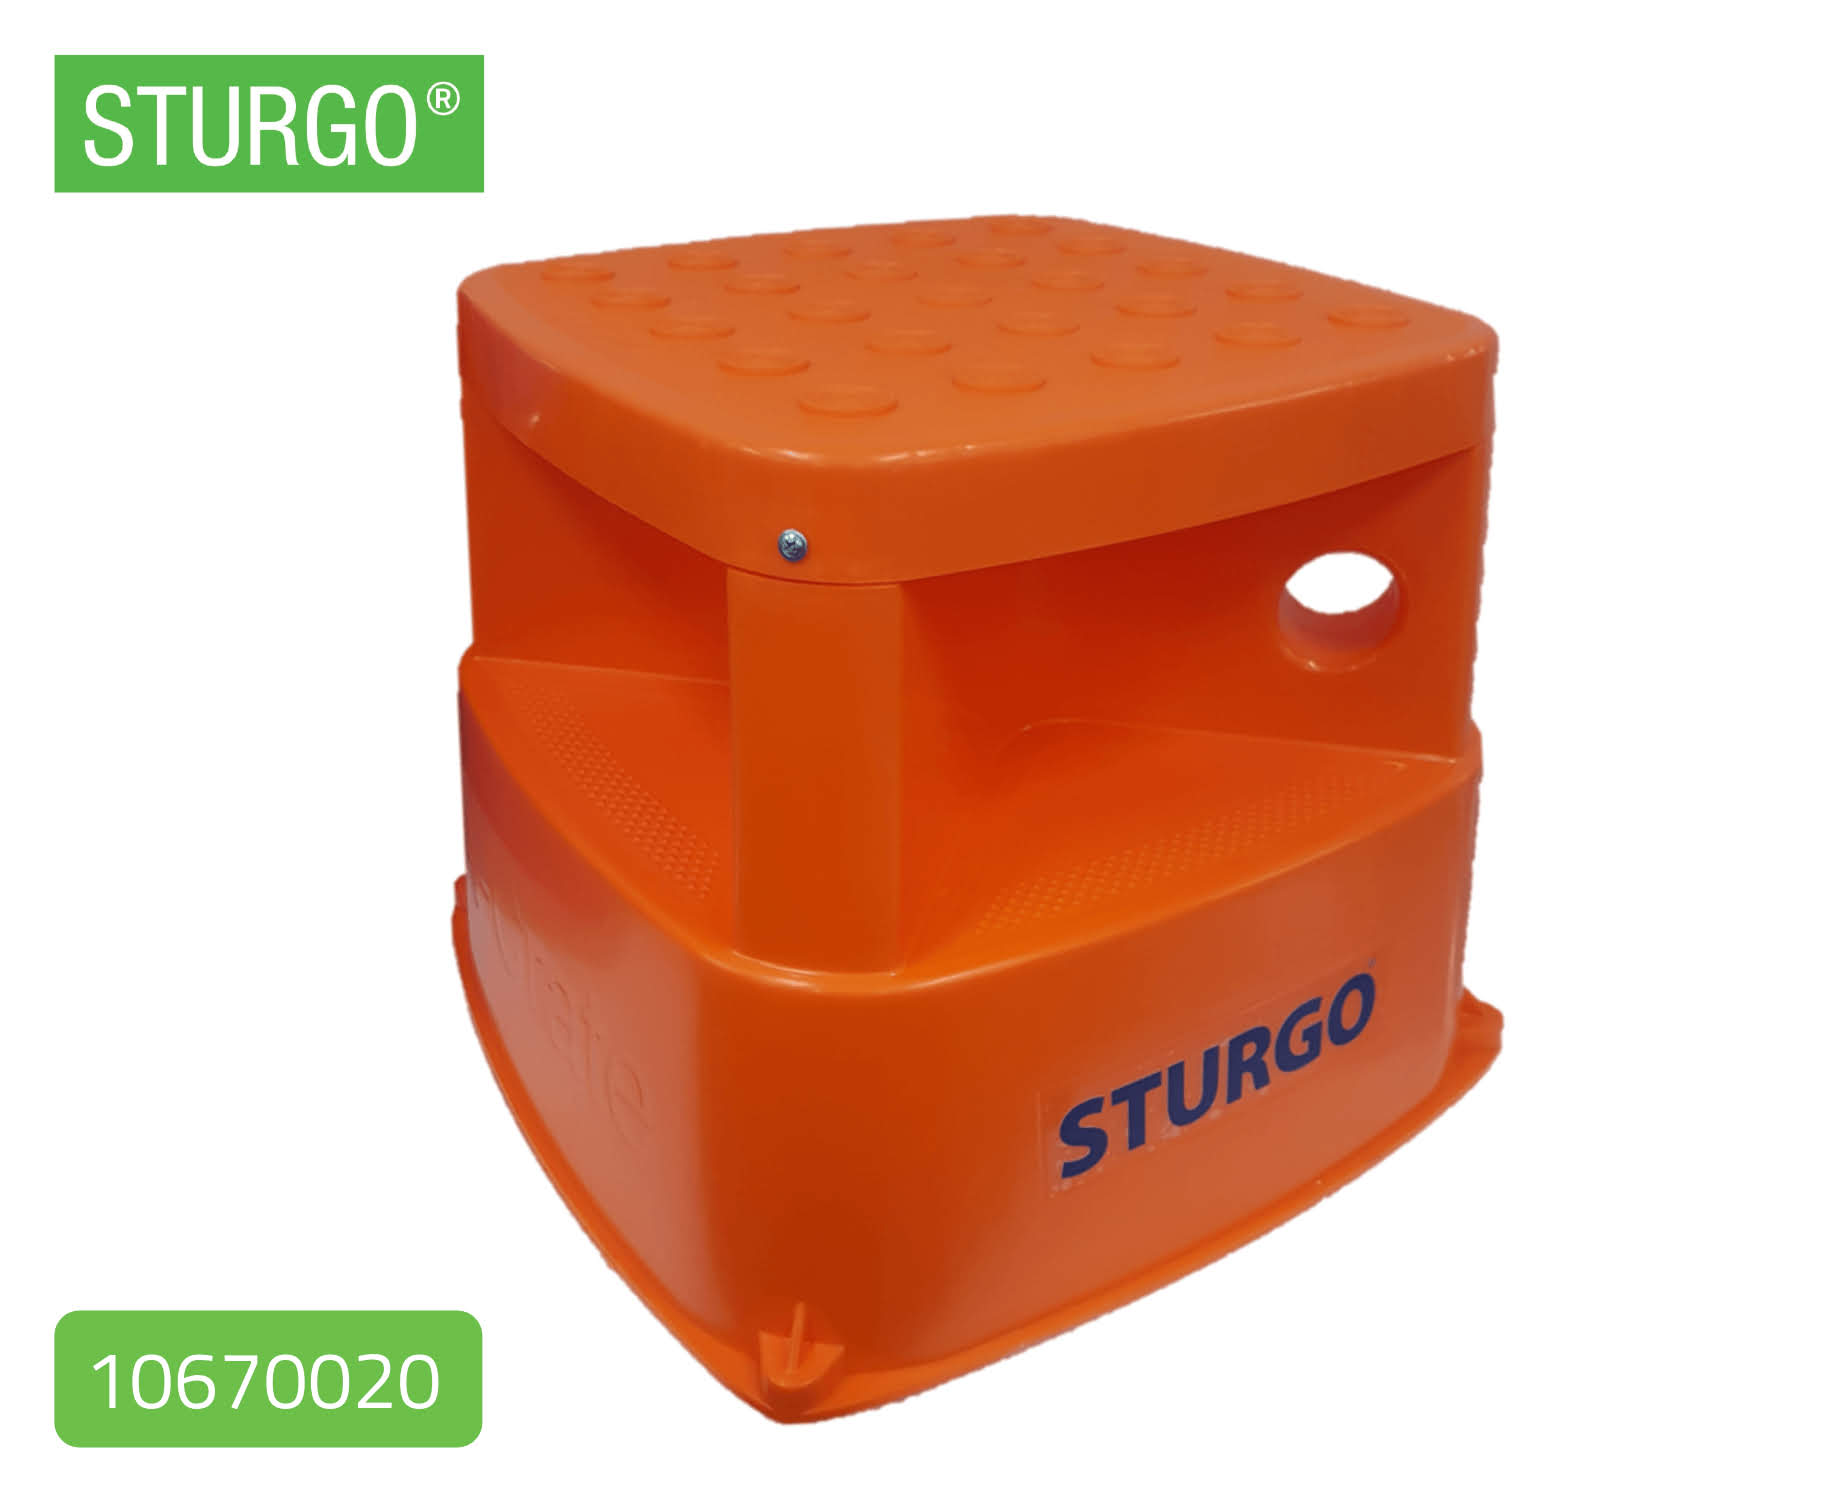 STURGO® iCrate Safety Step